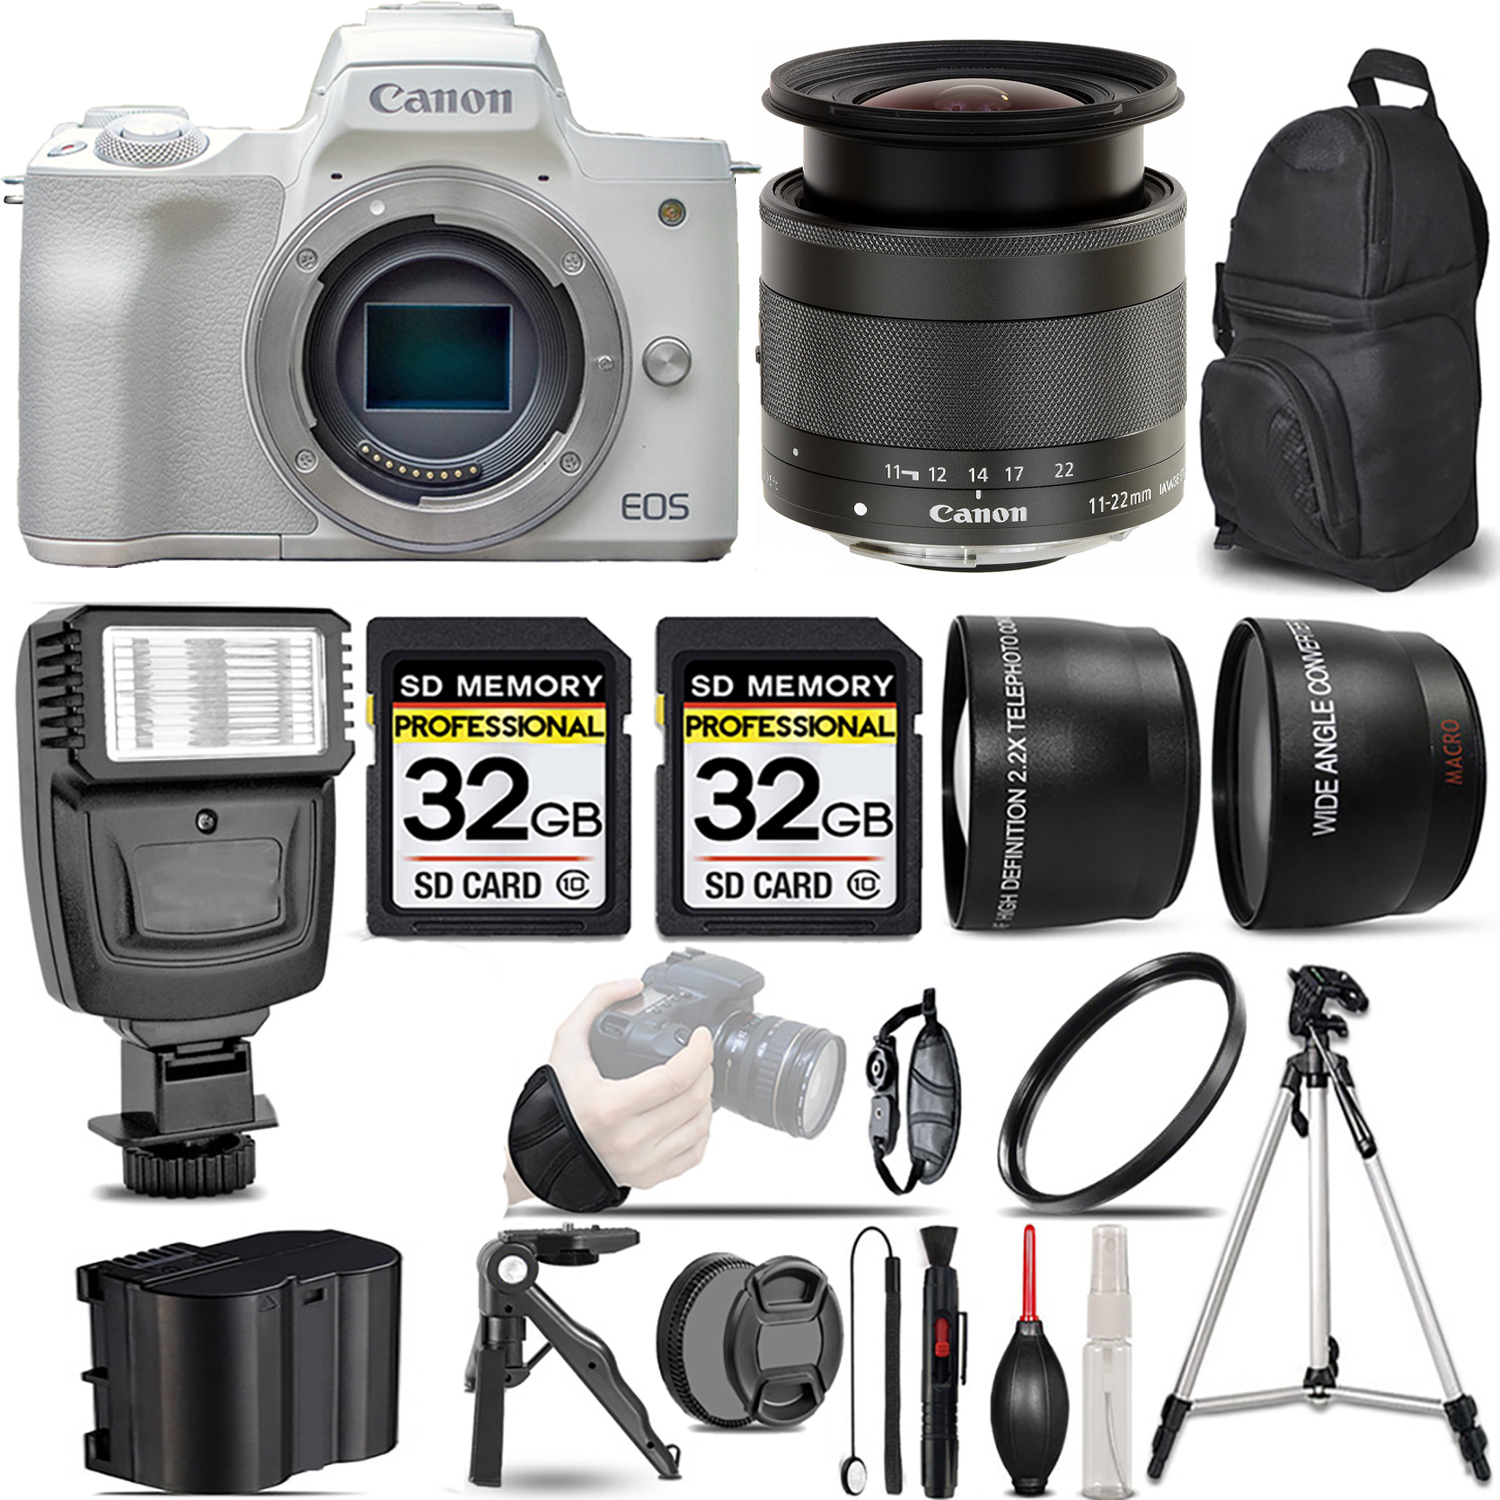 EOS M50 Mark II Camera (White) + 11-22mm f/4-5.6 IS STM Lens + Flash + 64GB - Kit *FREE SHIPPING*